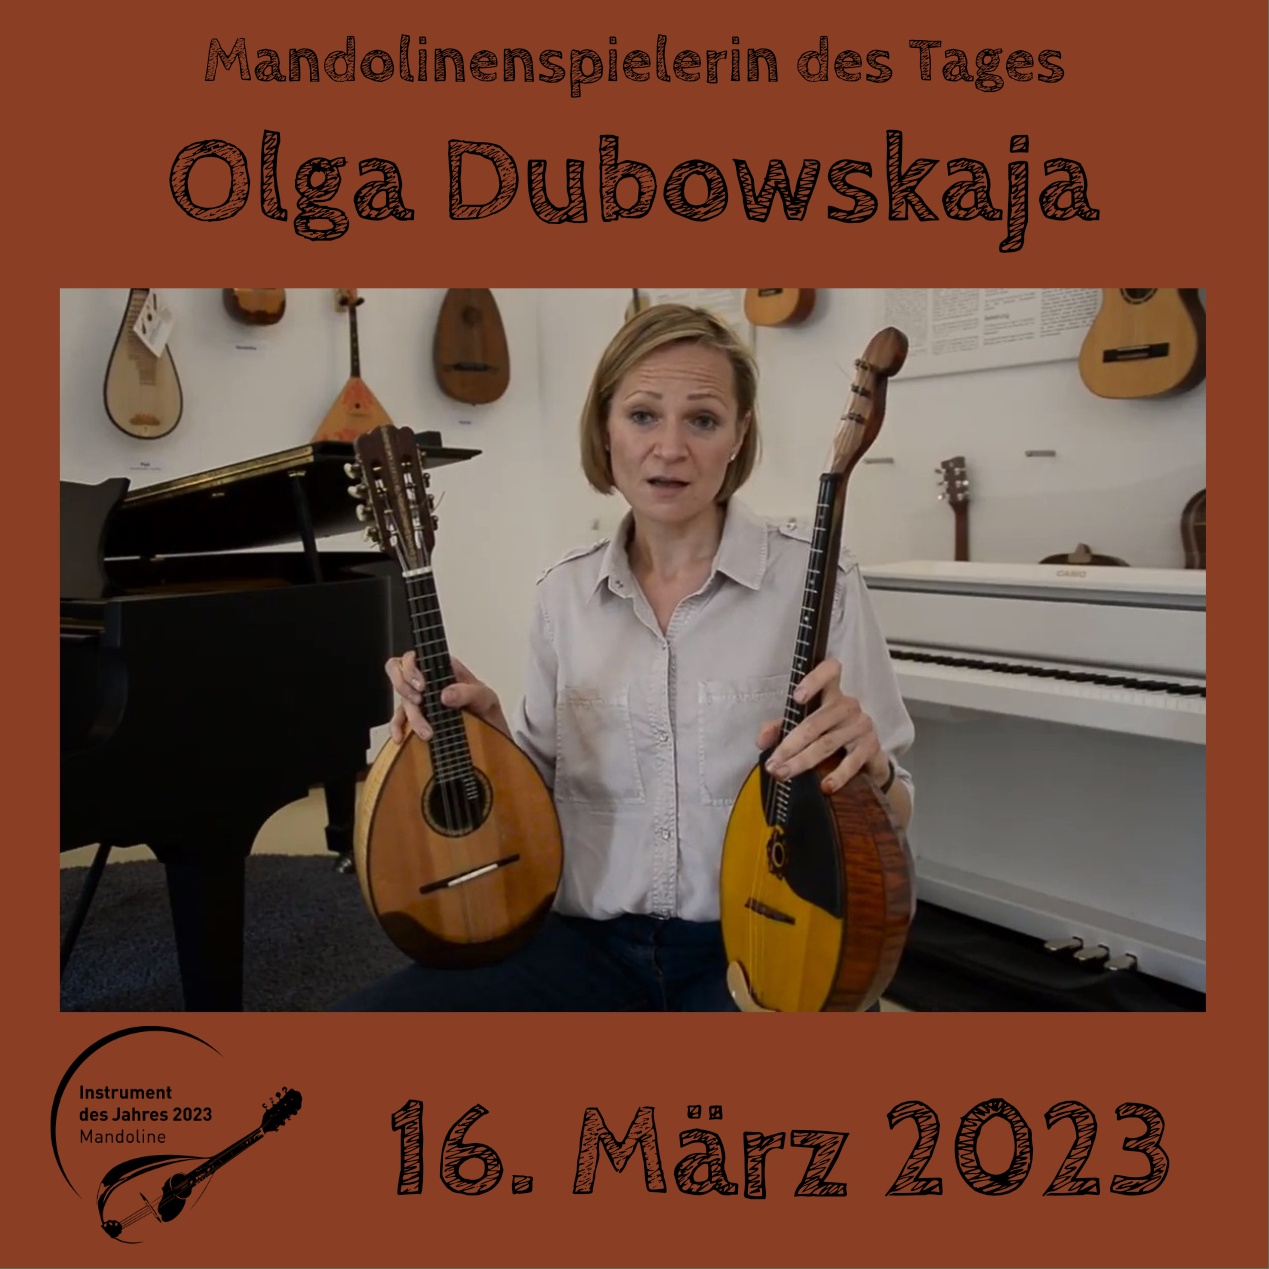 Olga Dubowskaja Mandoline Instrument des Jahres 2023 Mandolinenspielerin des Tages